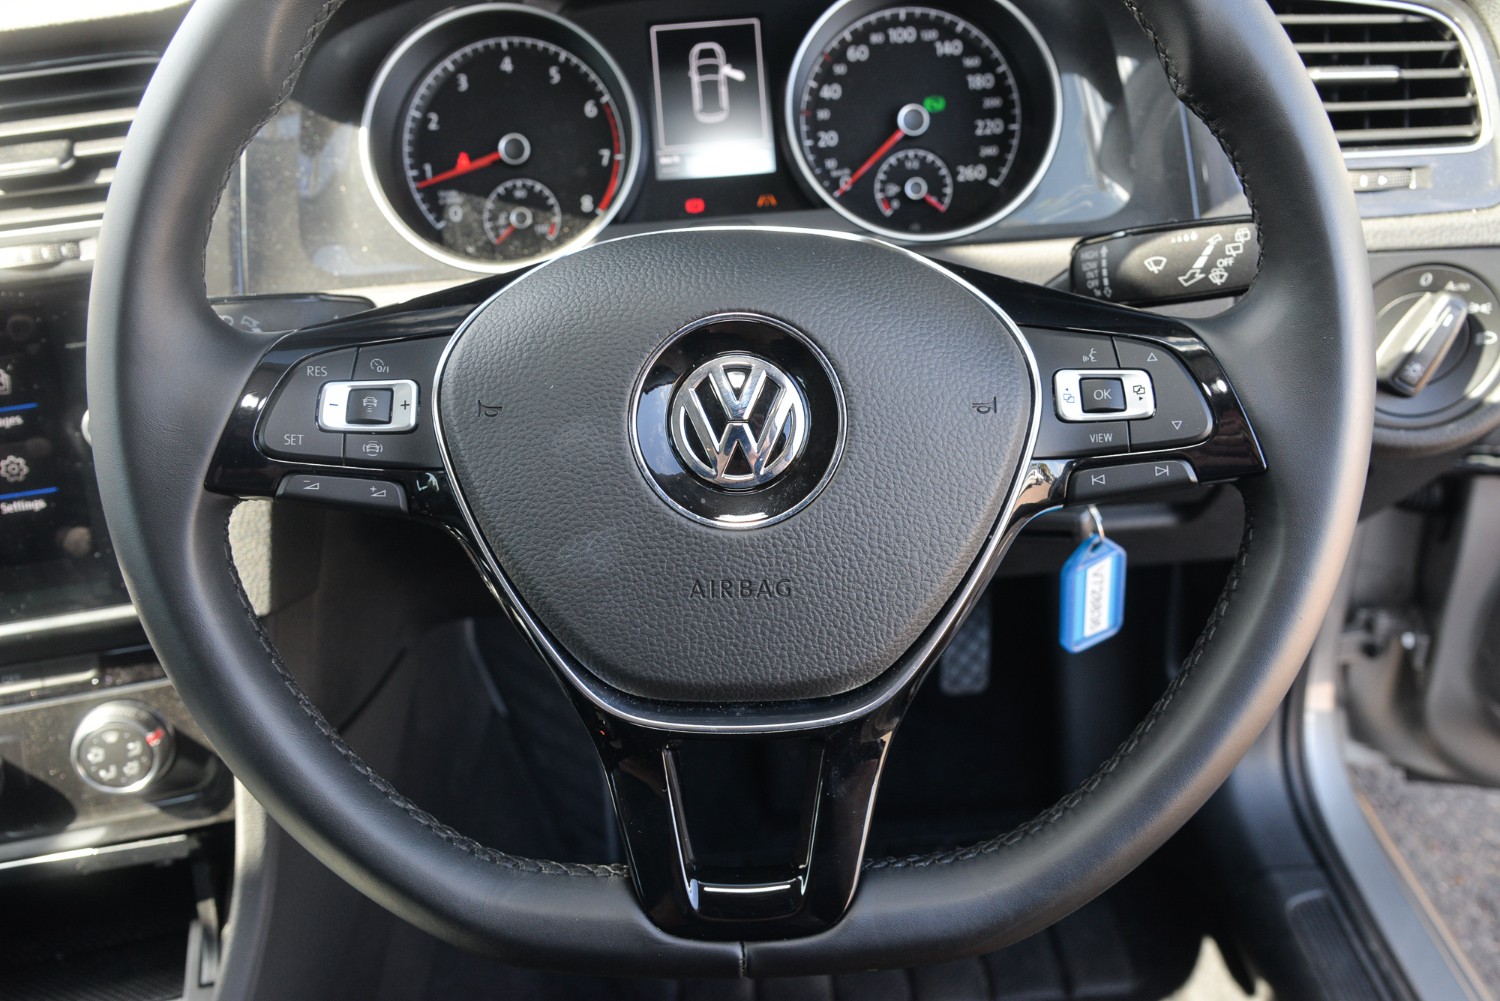 2019 MY19.5 Volkswagen Golf 7.5 110TSI Trendline Hatch Image 9